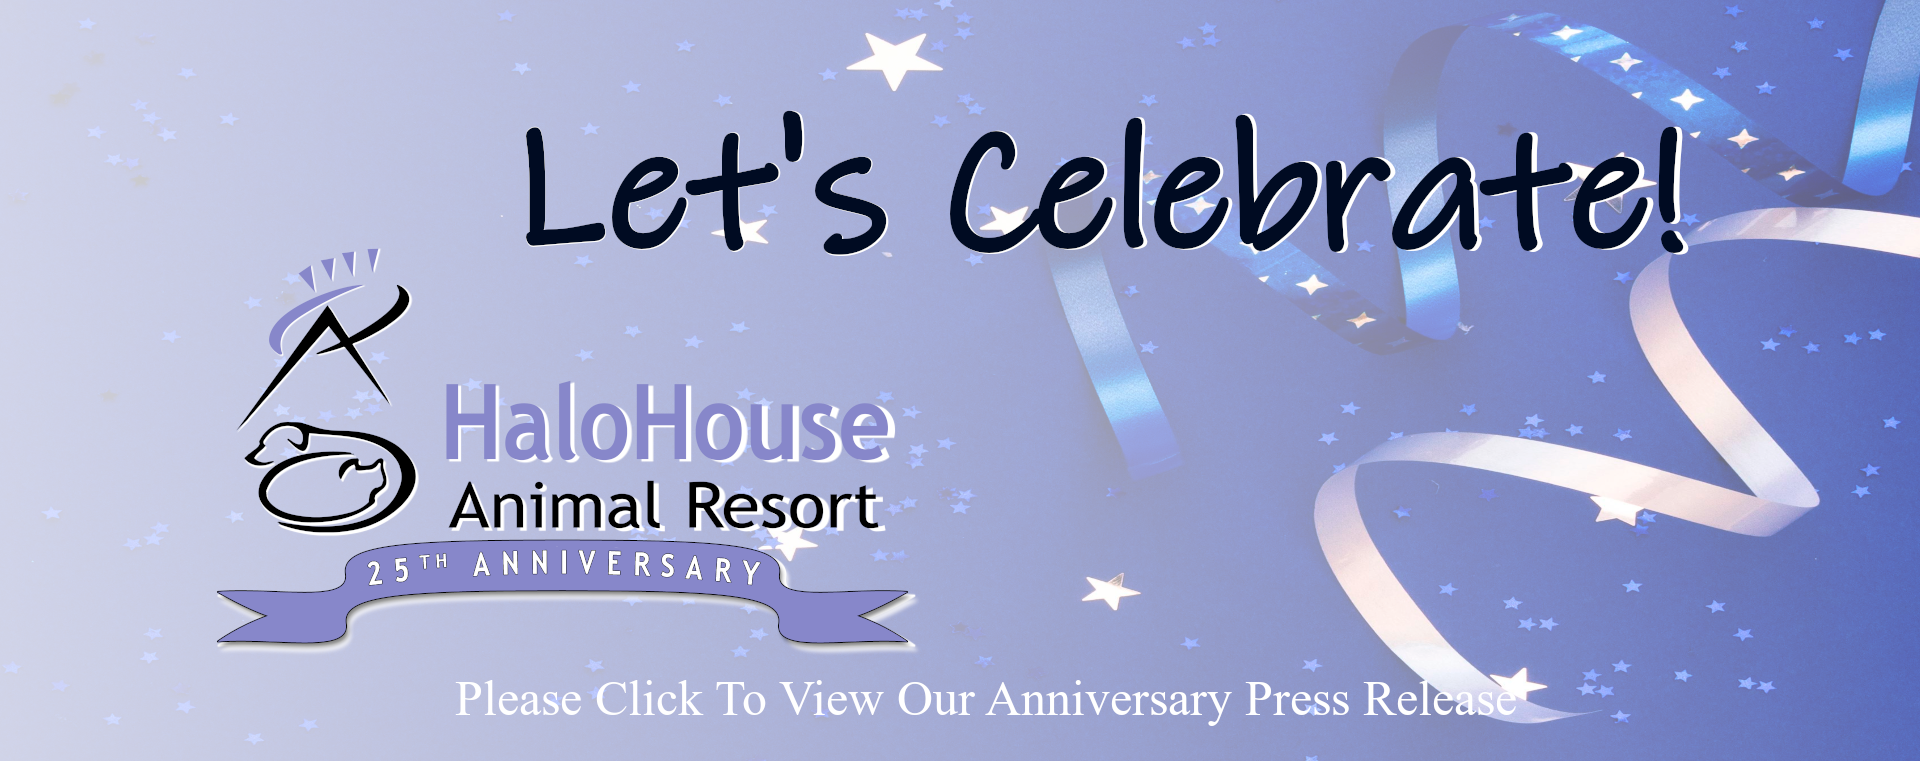 Halo House Animal Resort Celebrates Their 25 Anniversary